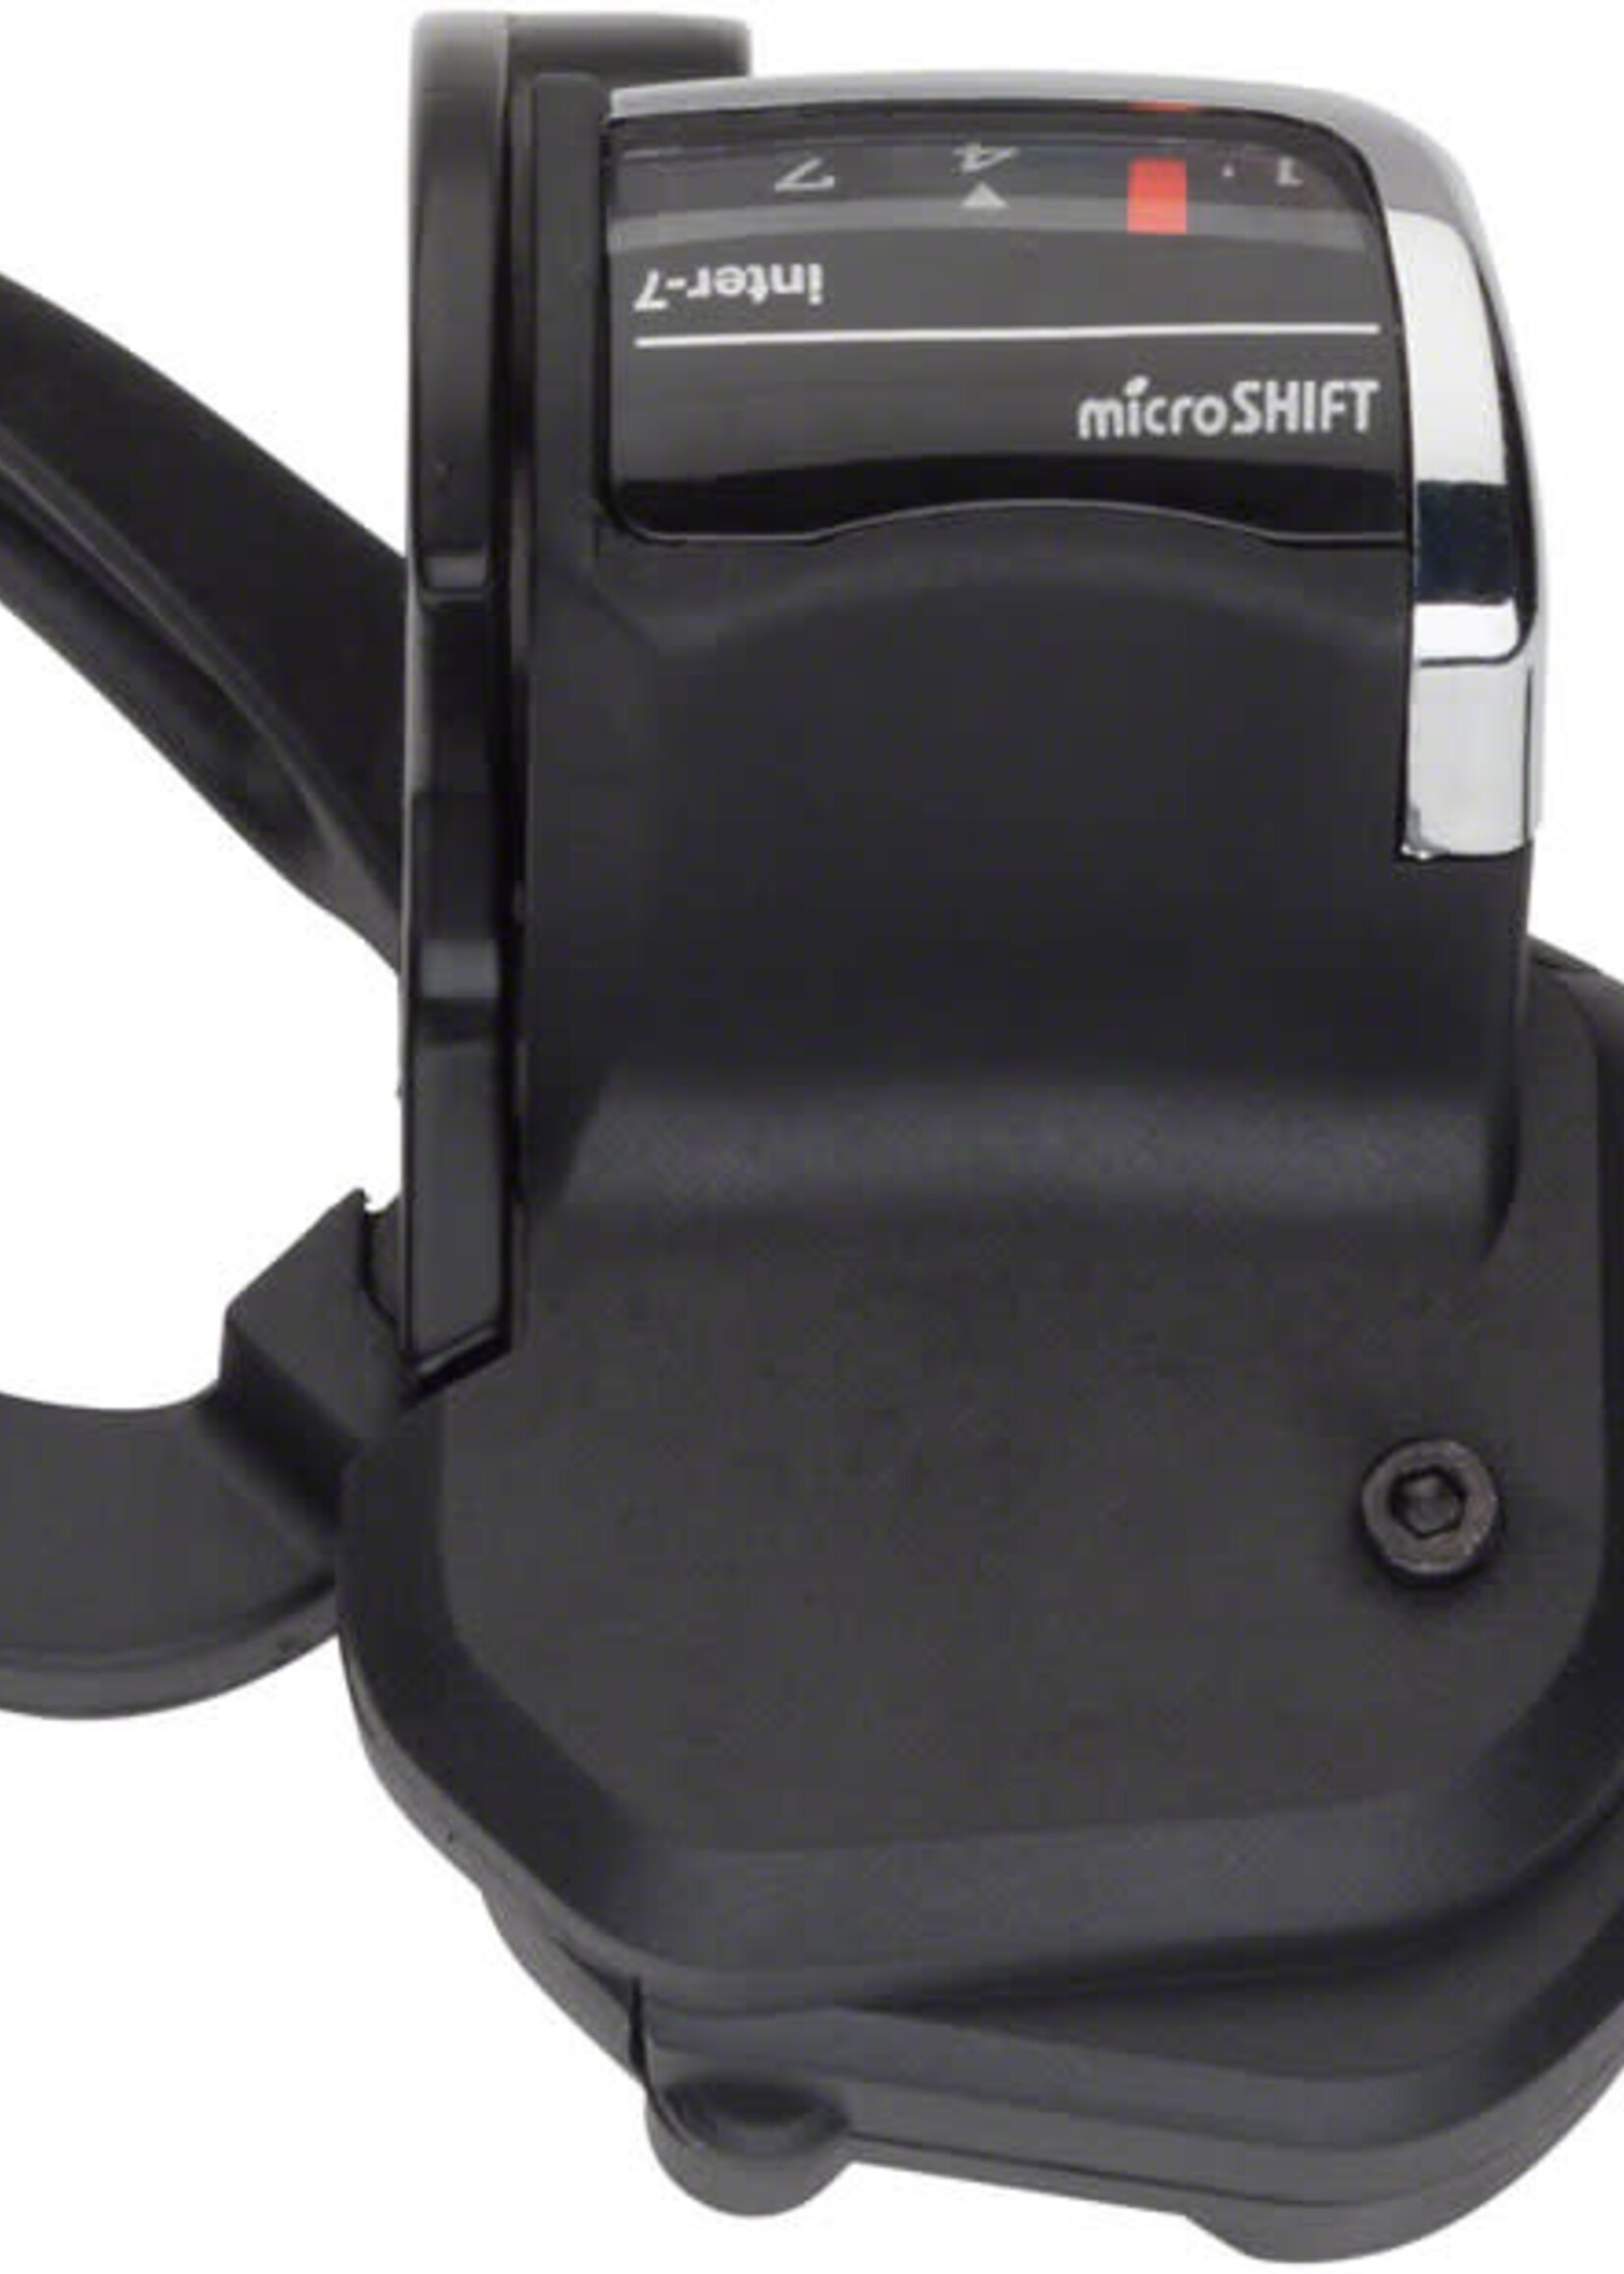 microSHIFT microSHIFT Internal Gear Flat Bar Trigger Shifter Shimano Nexus 7 Compatible